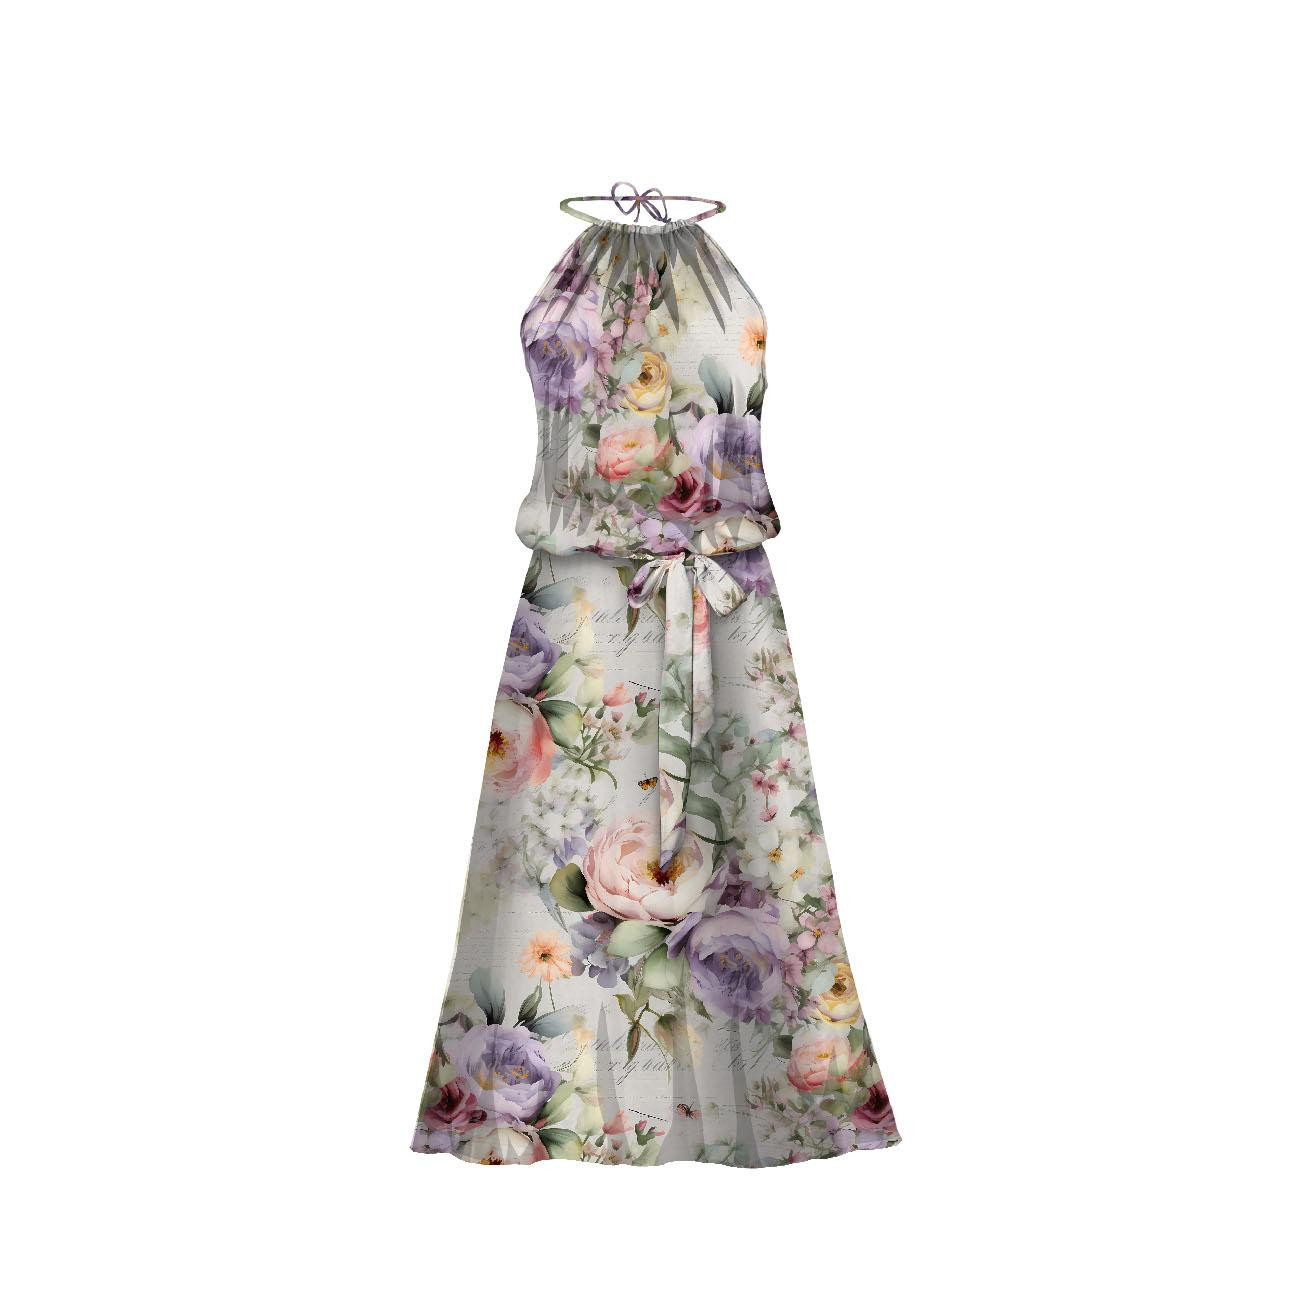 DRESS "DALIA" MAXI - VINTAGE FLOWERS pat. 15 - sewing set